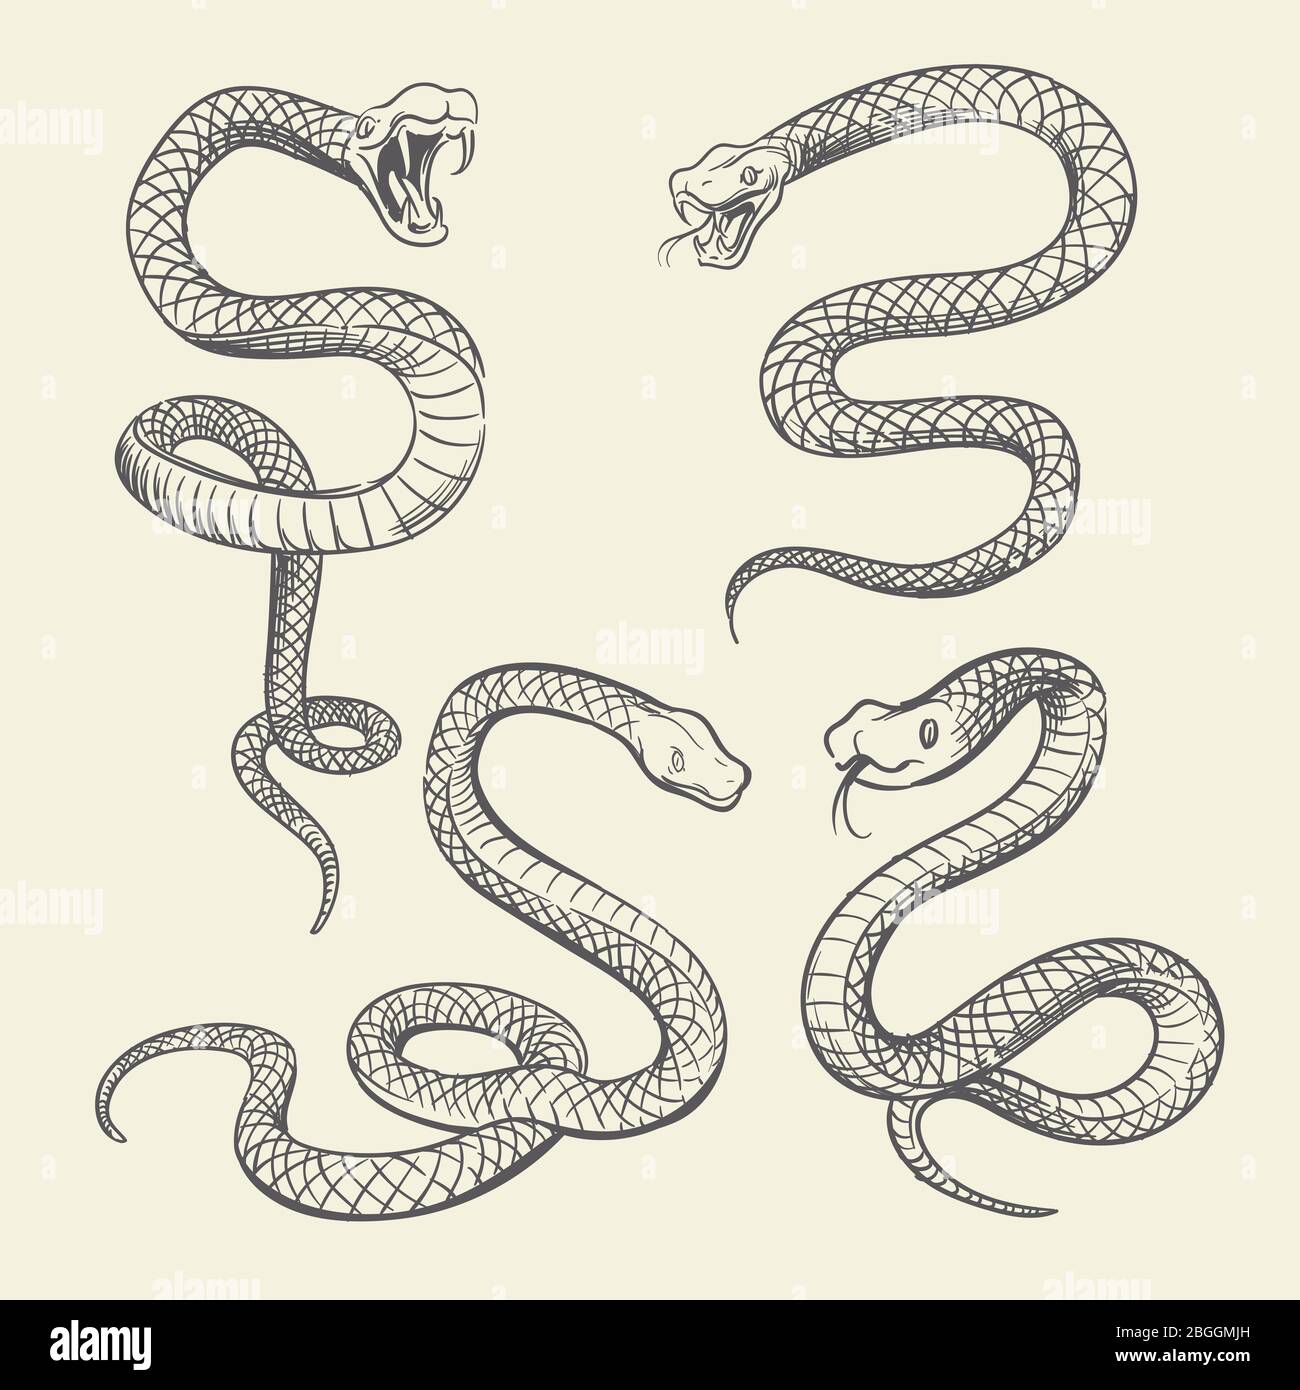 Reptile Drawing Images - Free Download on Freepik